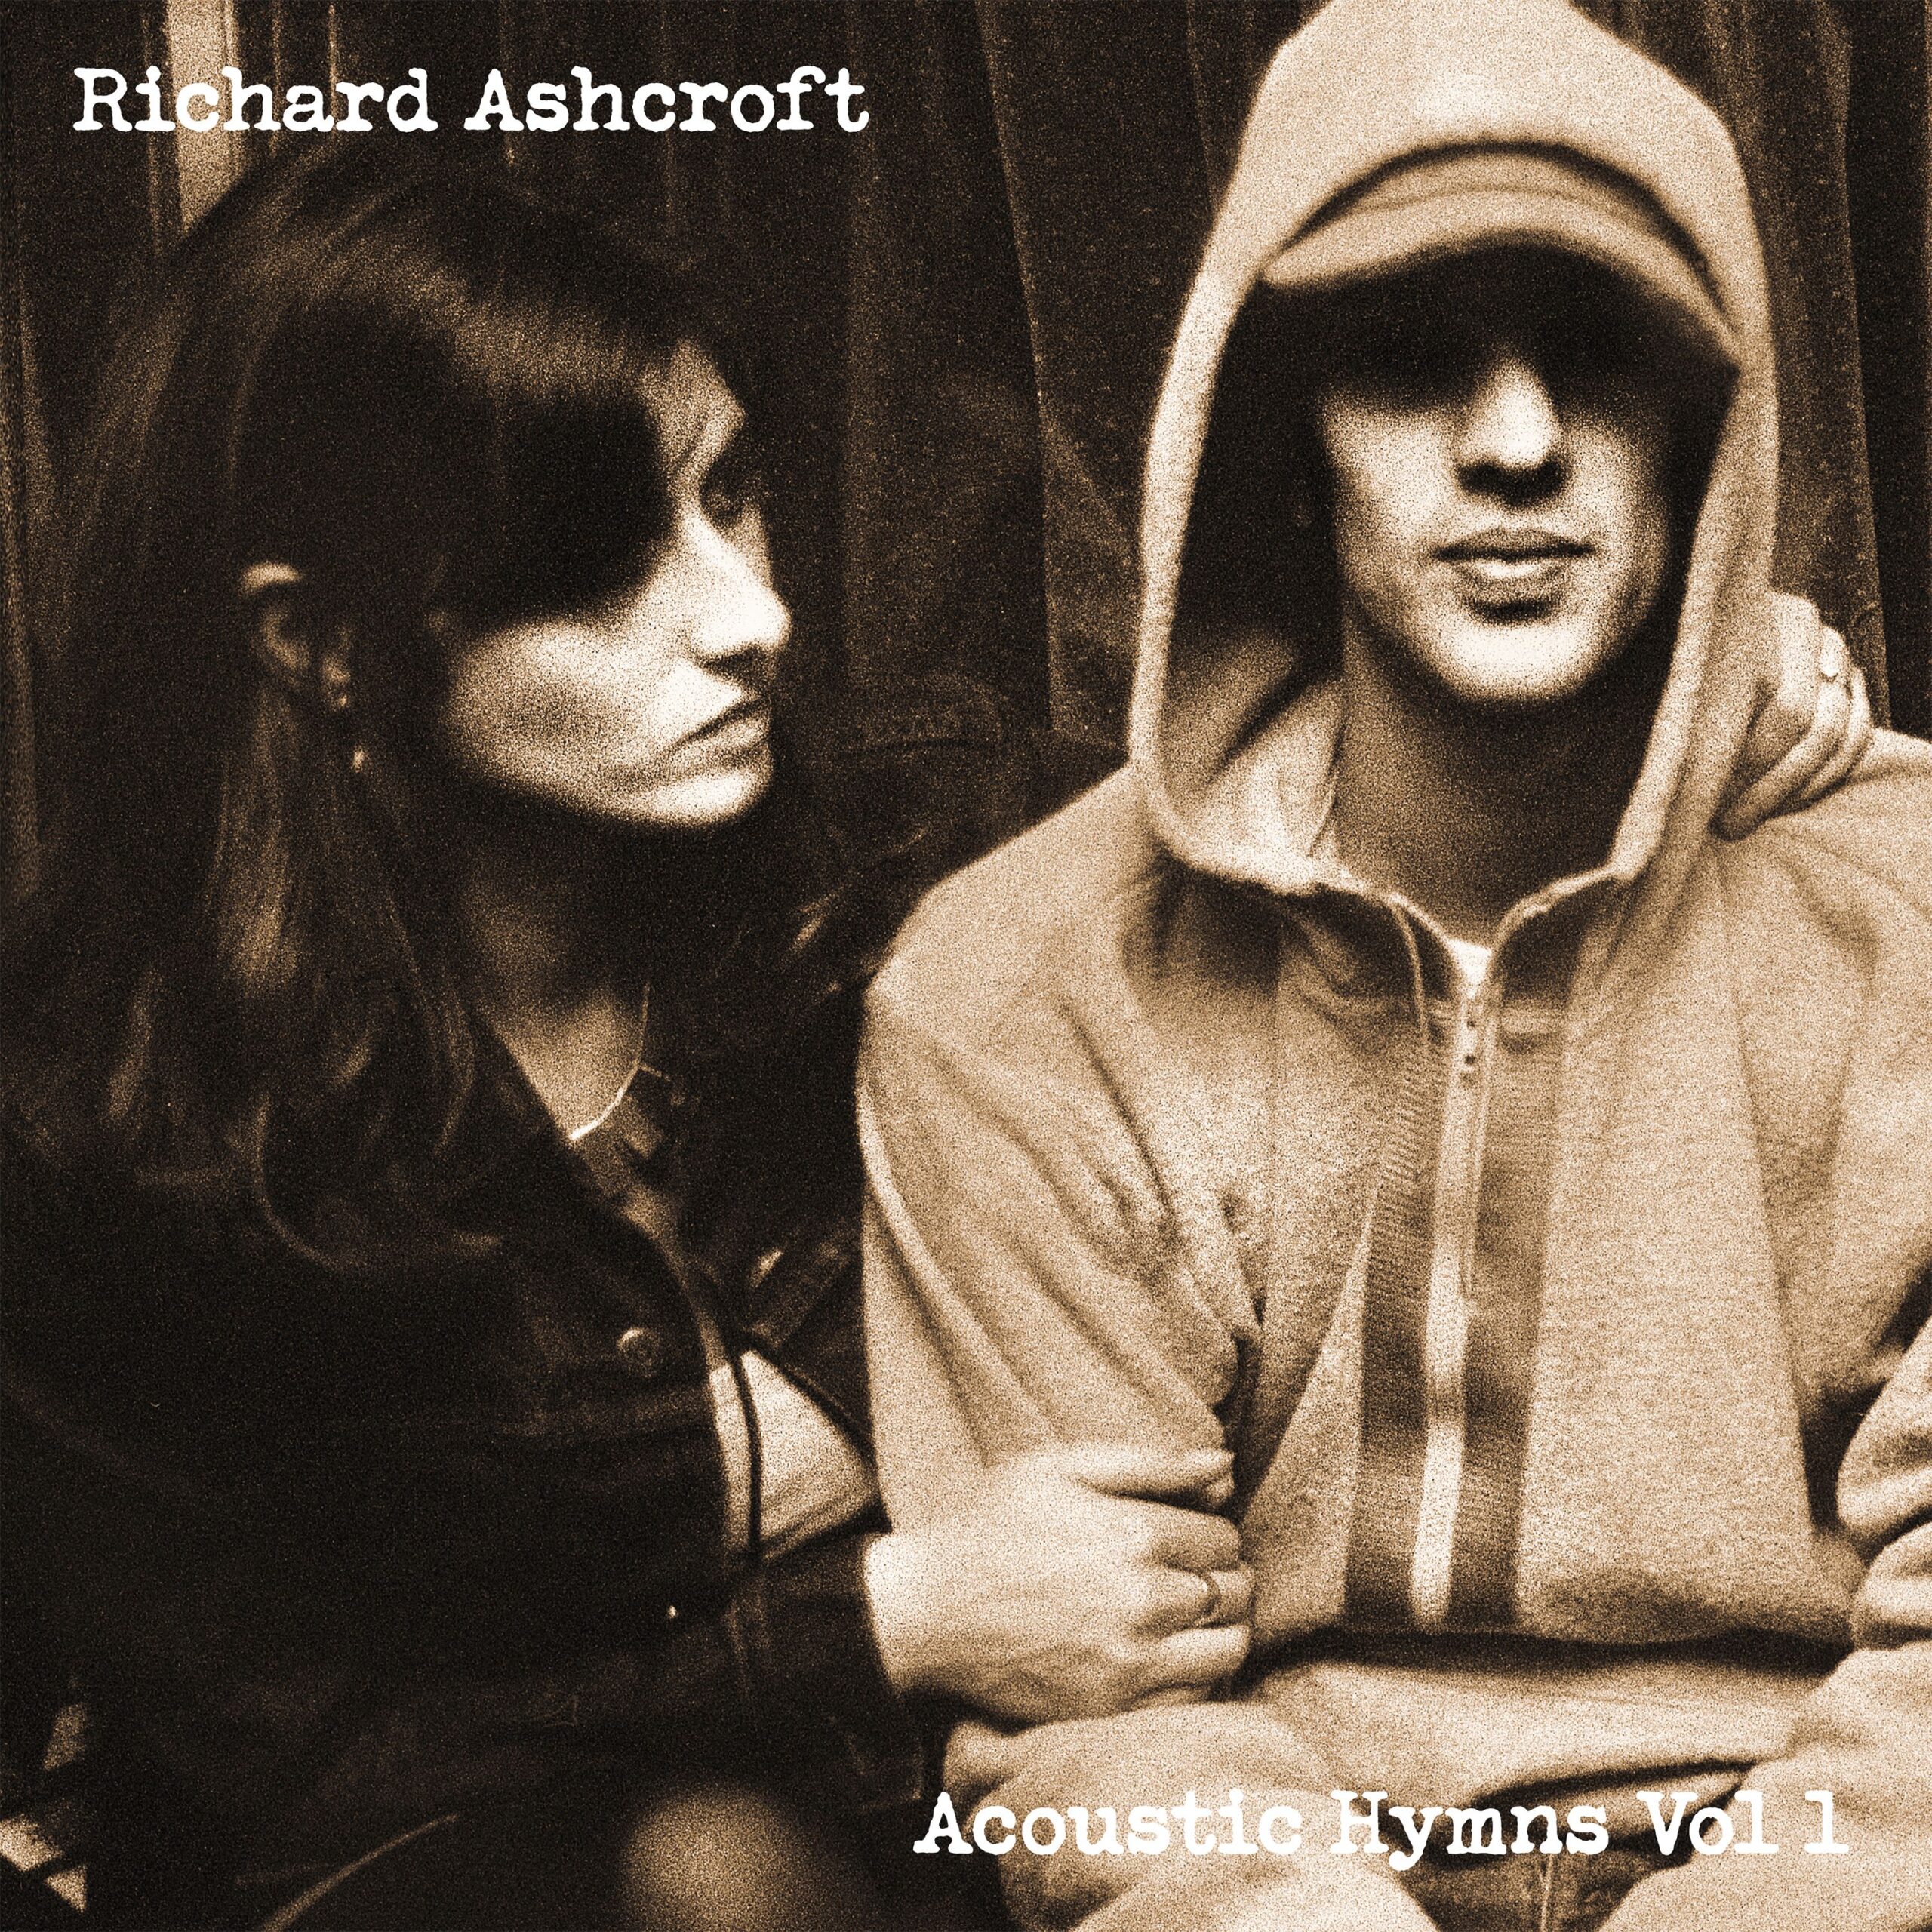 Richard Ashcroft estrenó álbum y sencillo junto a Liam Gallagher